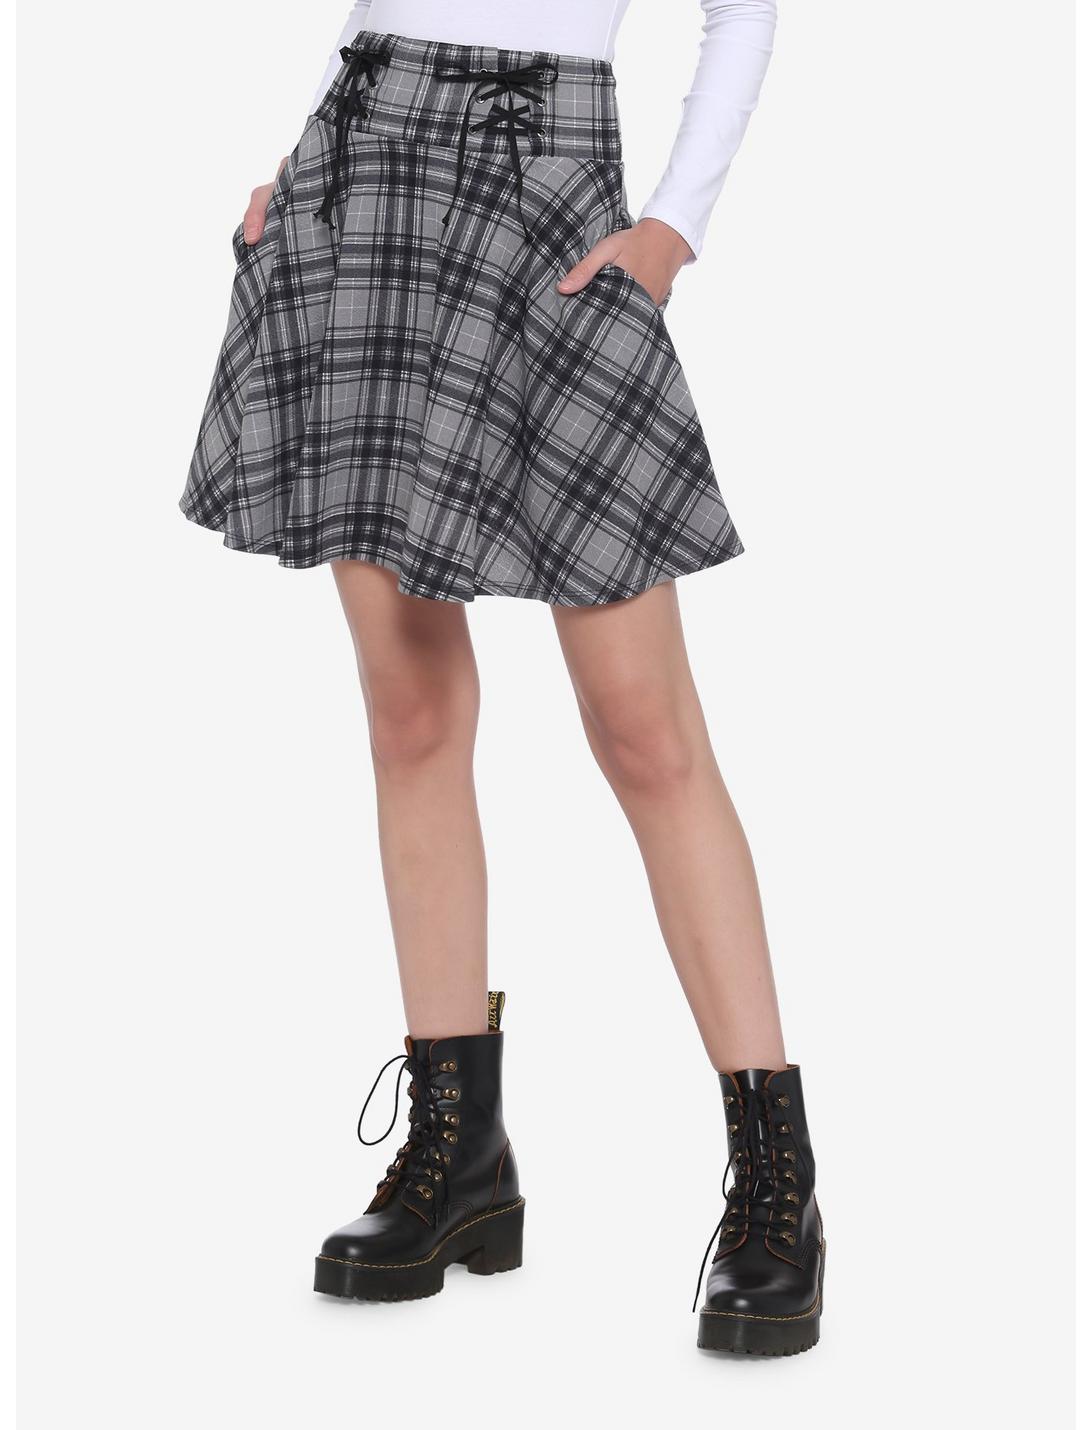 Grey & Black Plaid Lace-Up Yoke Skater Skirt | Hot Topic